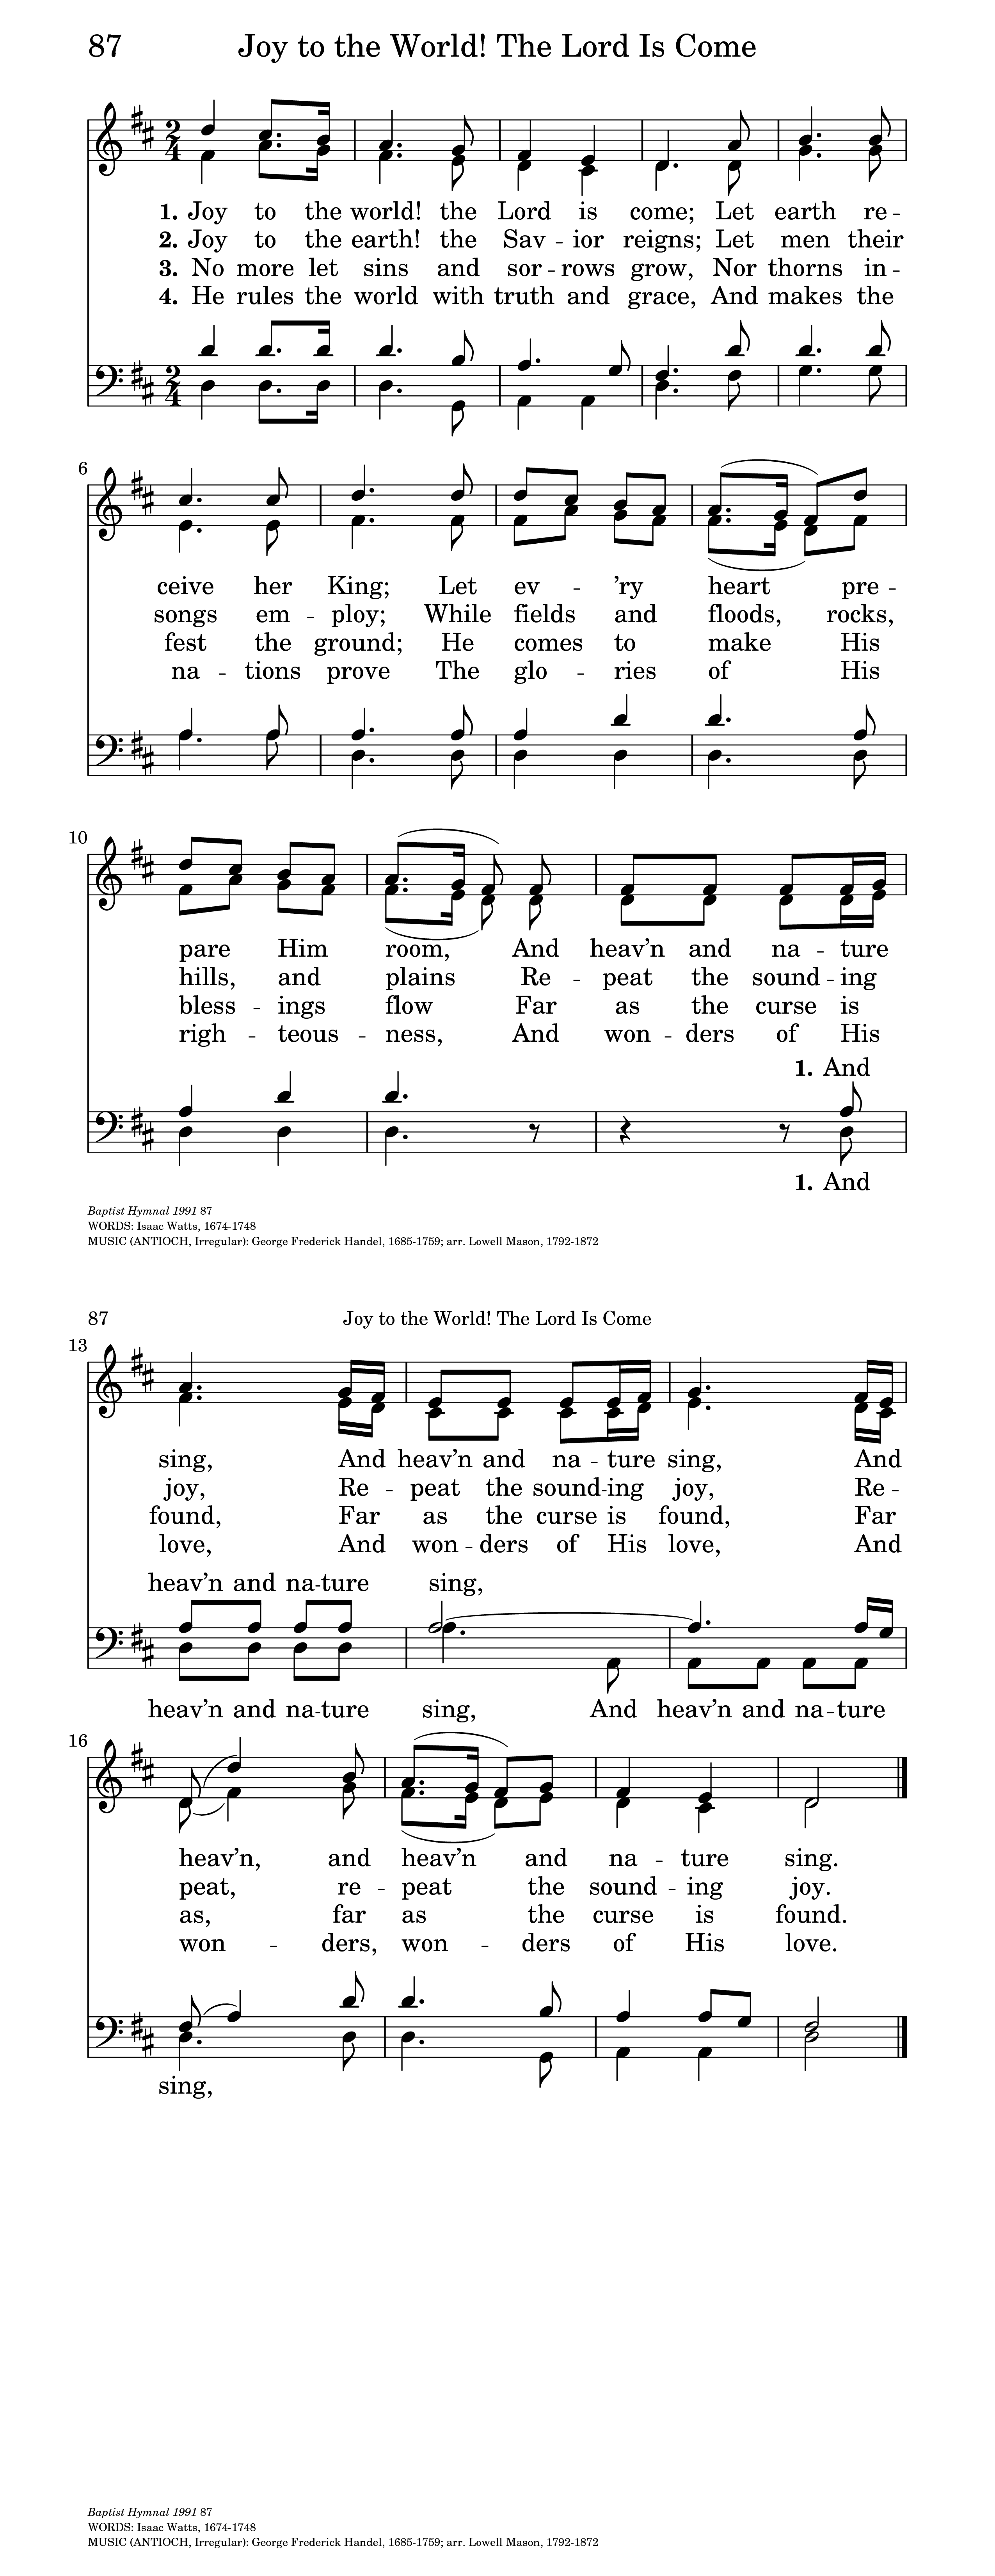 Golden Eyes. Op. 15, No. 2 - Public domain American sheet music